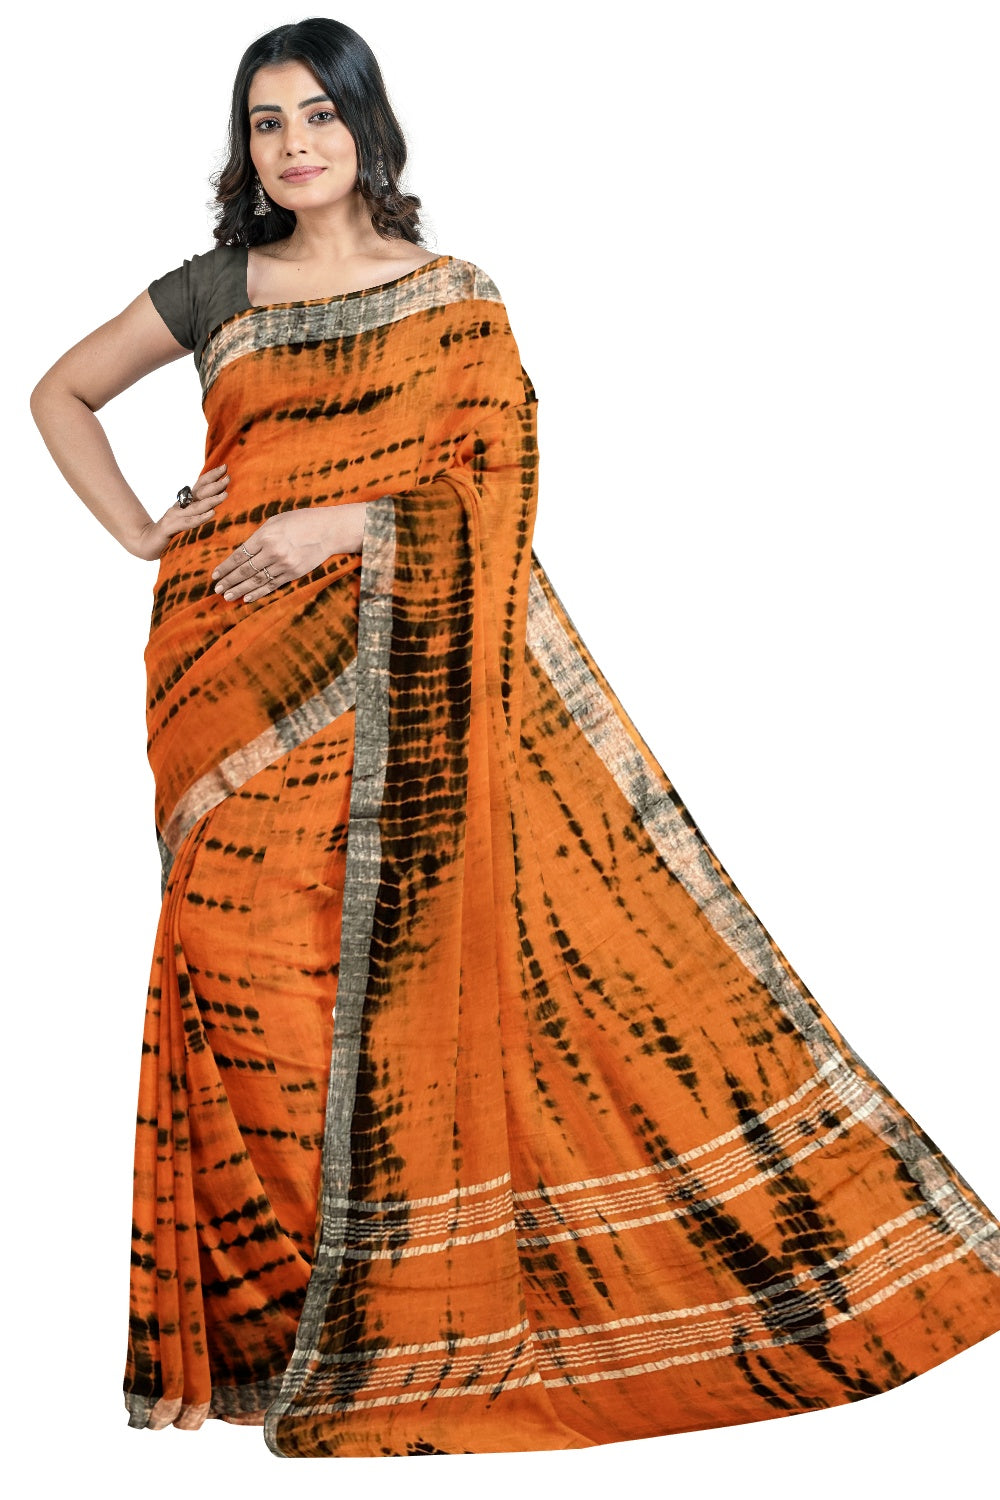 Southloom Linen Orange and Black Designer Saree